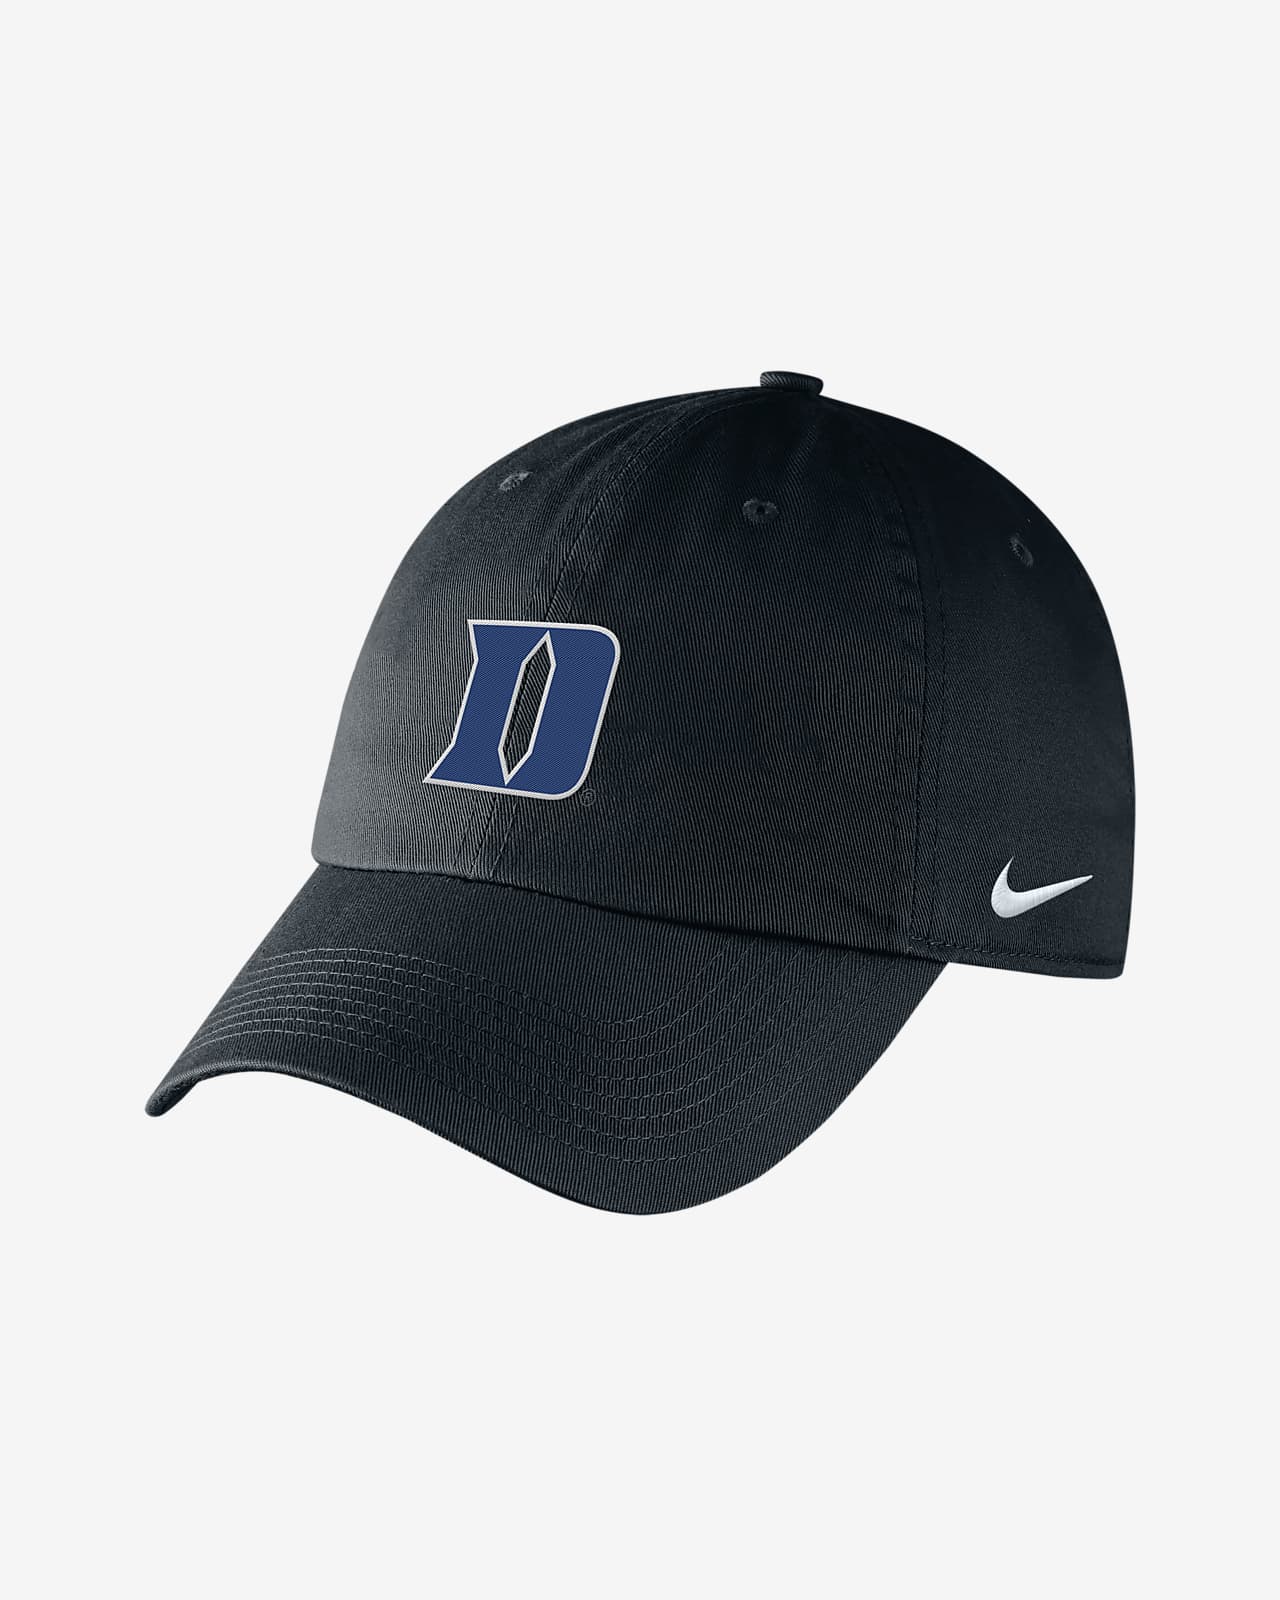 Nike College (Duke) Adjustable Logo Hat 